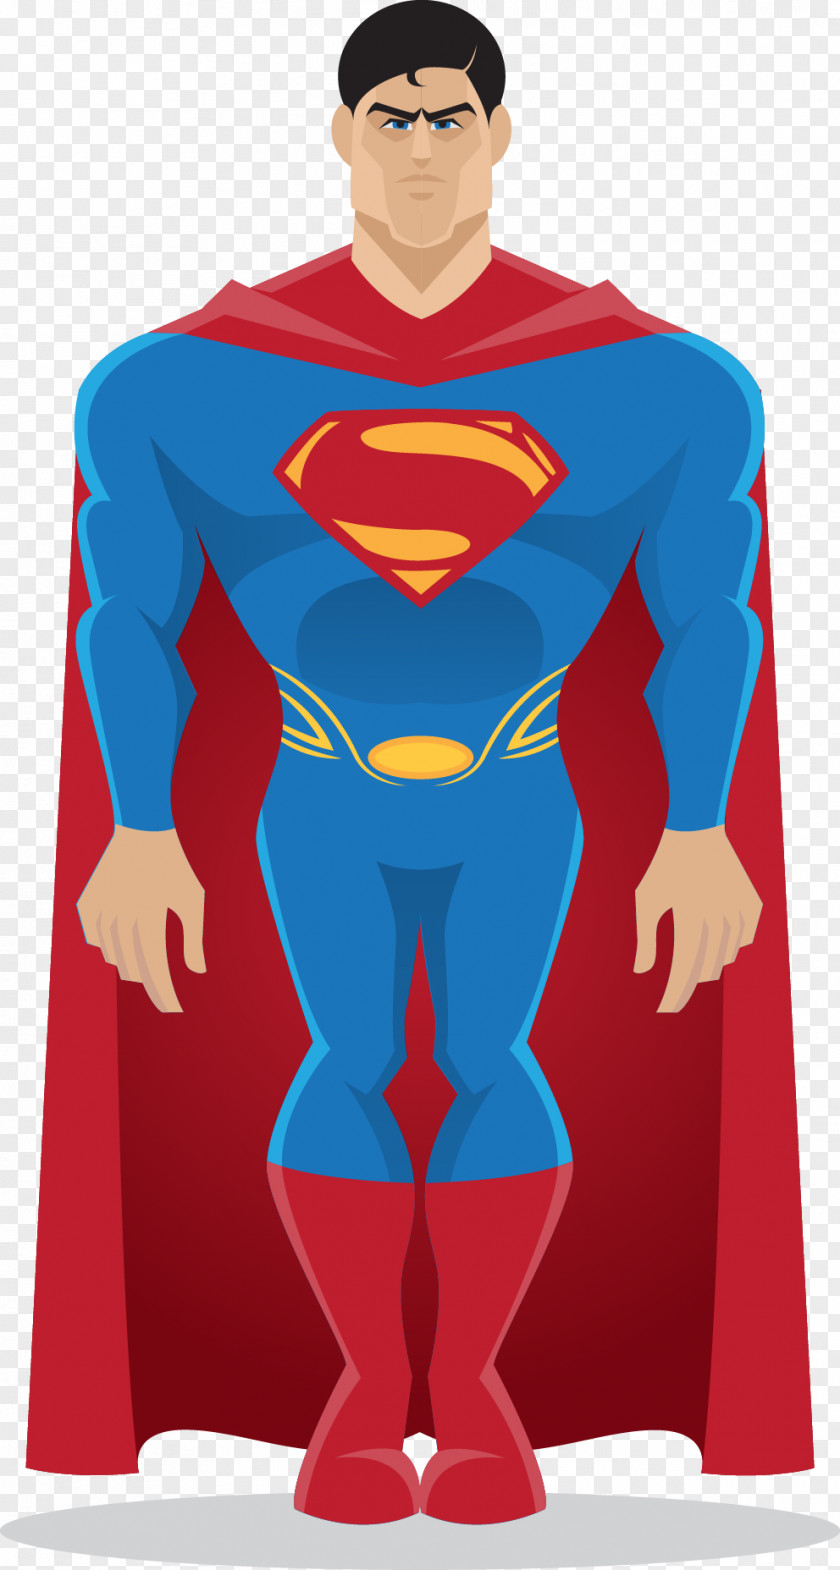 Superman Clark Kent Batman Superhero Illustration PNG